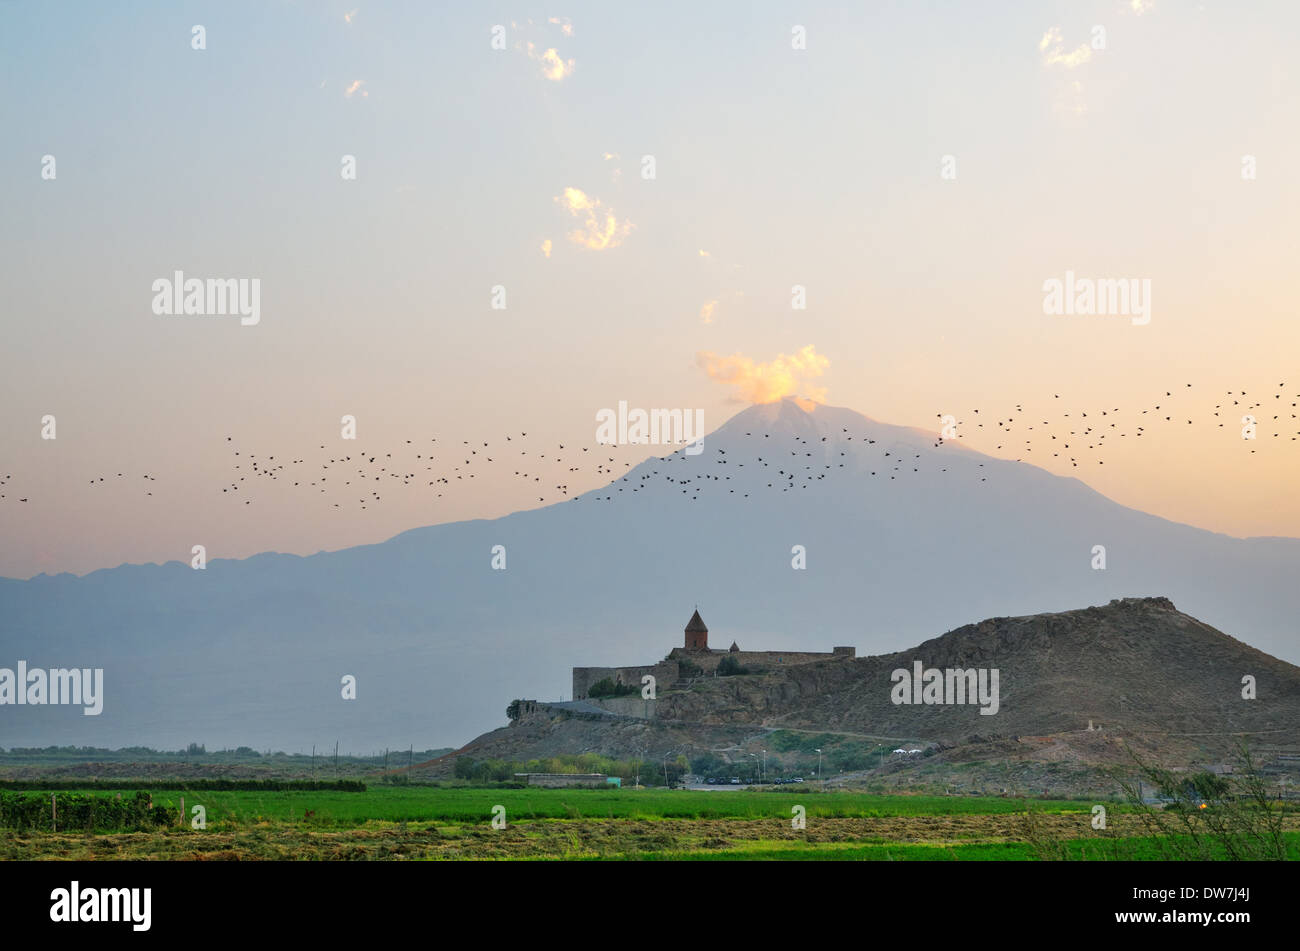 Khor Virap Monastery with Mount Ararat in background, Ararat valley, Armenia Stock Photo